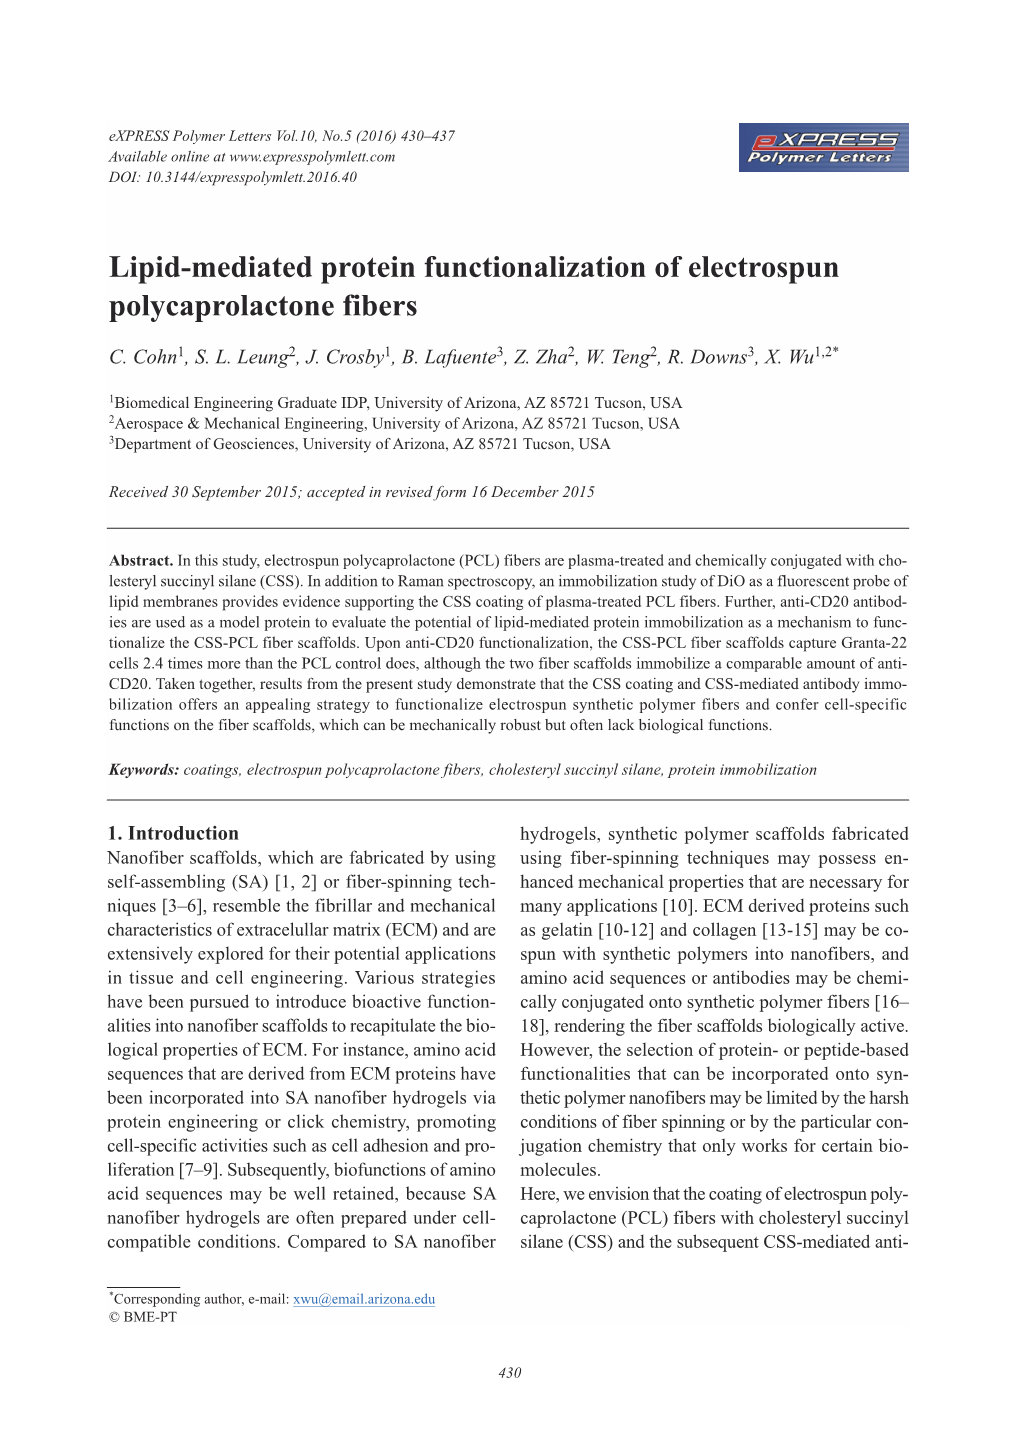 Lipid-Mediated Protein Functionalization of Electrospun Polycaprolactone Fibers